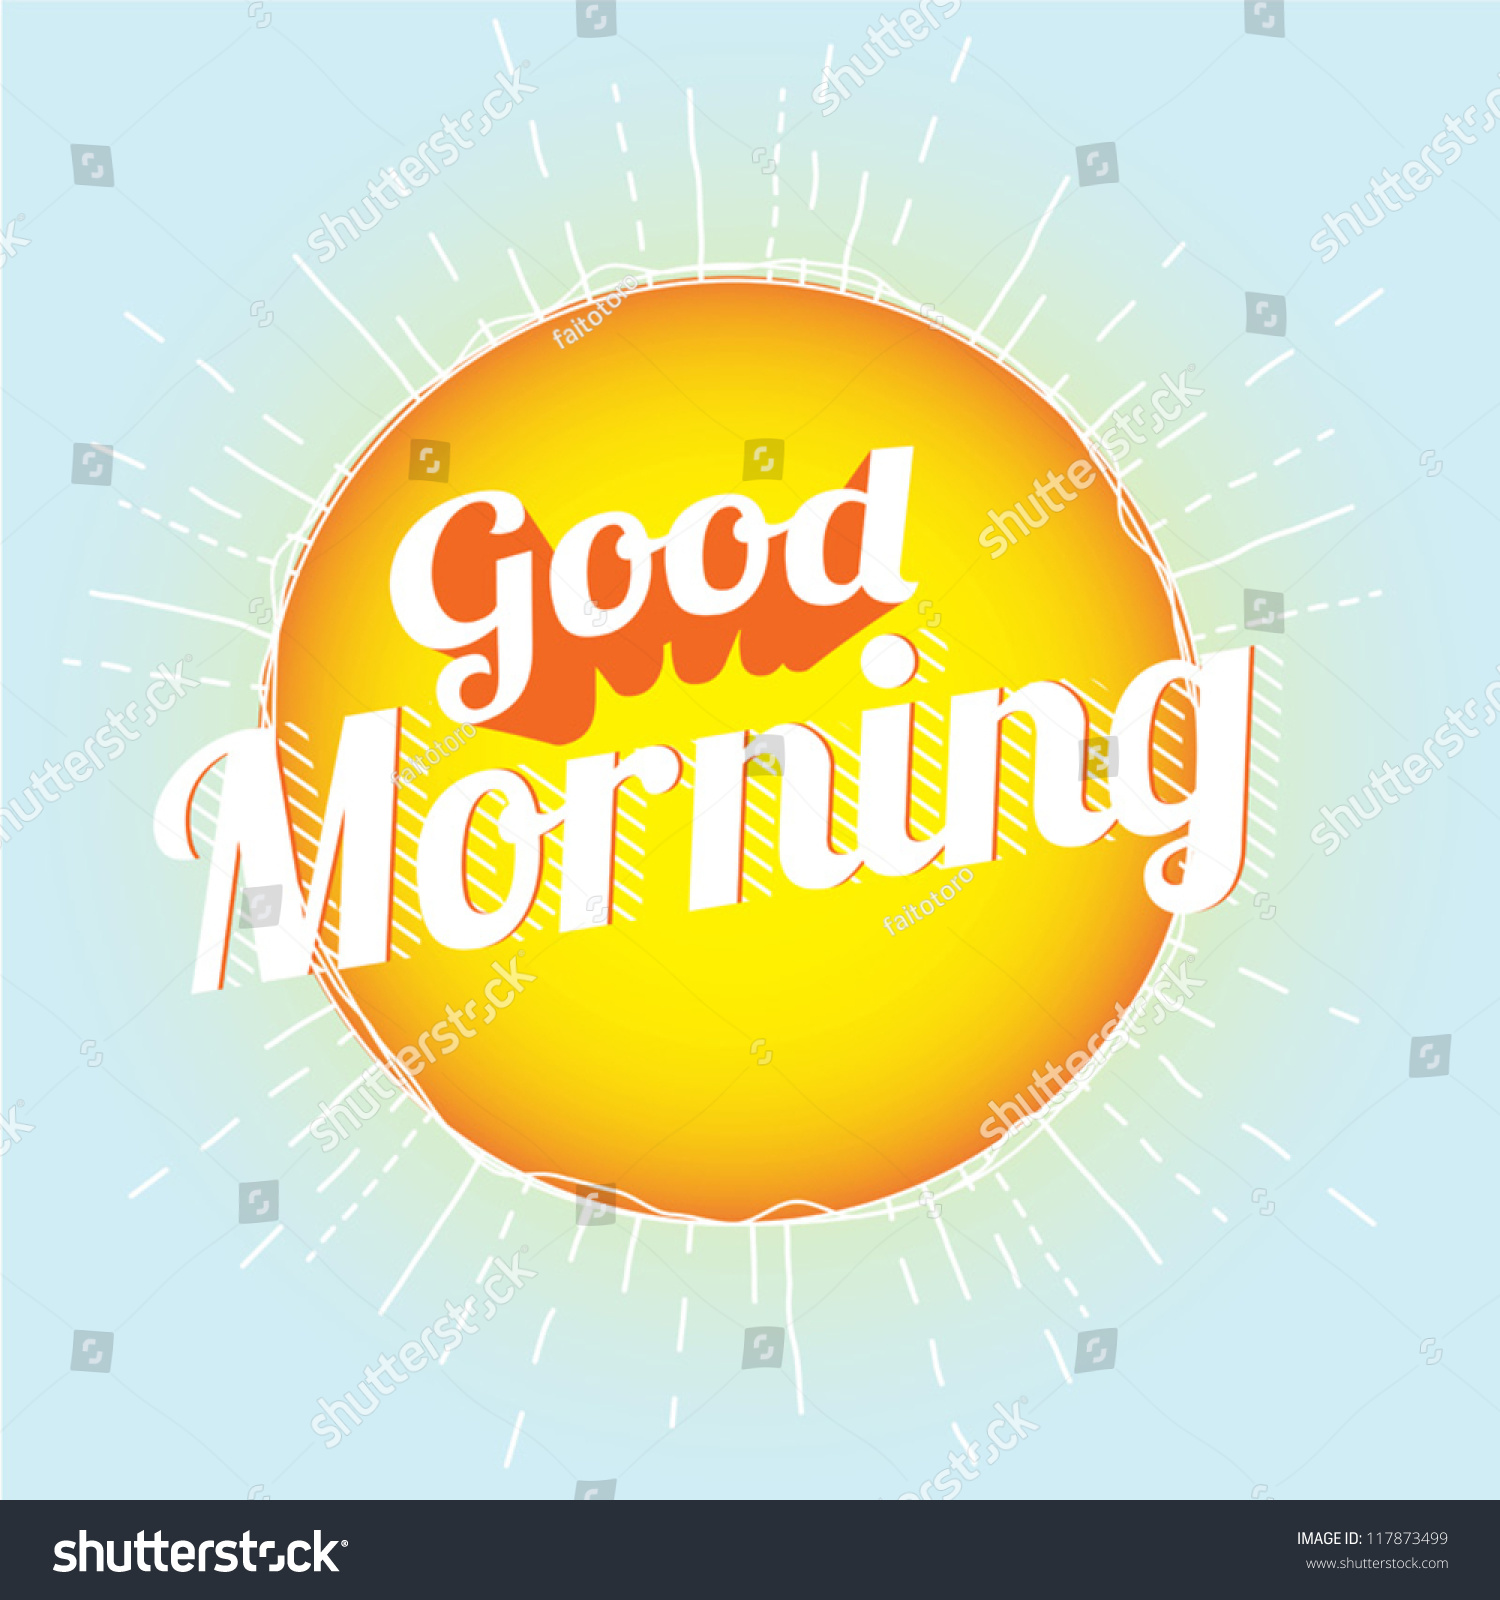 Good Morning Stock Vector Illustration 117873499 : Shutterstock